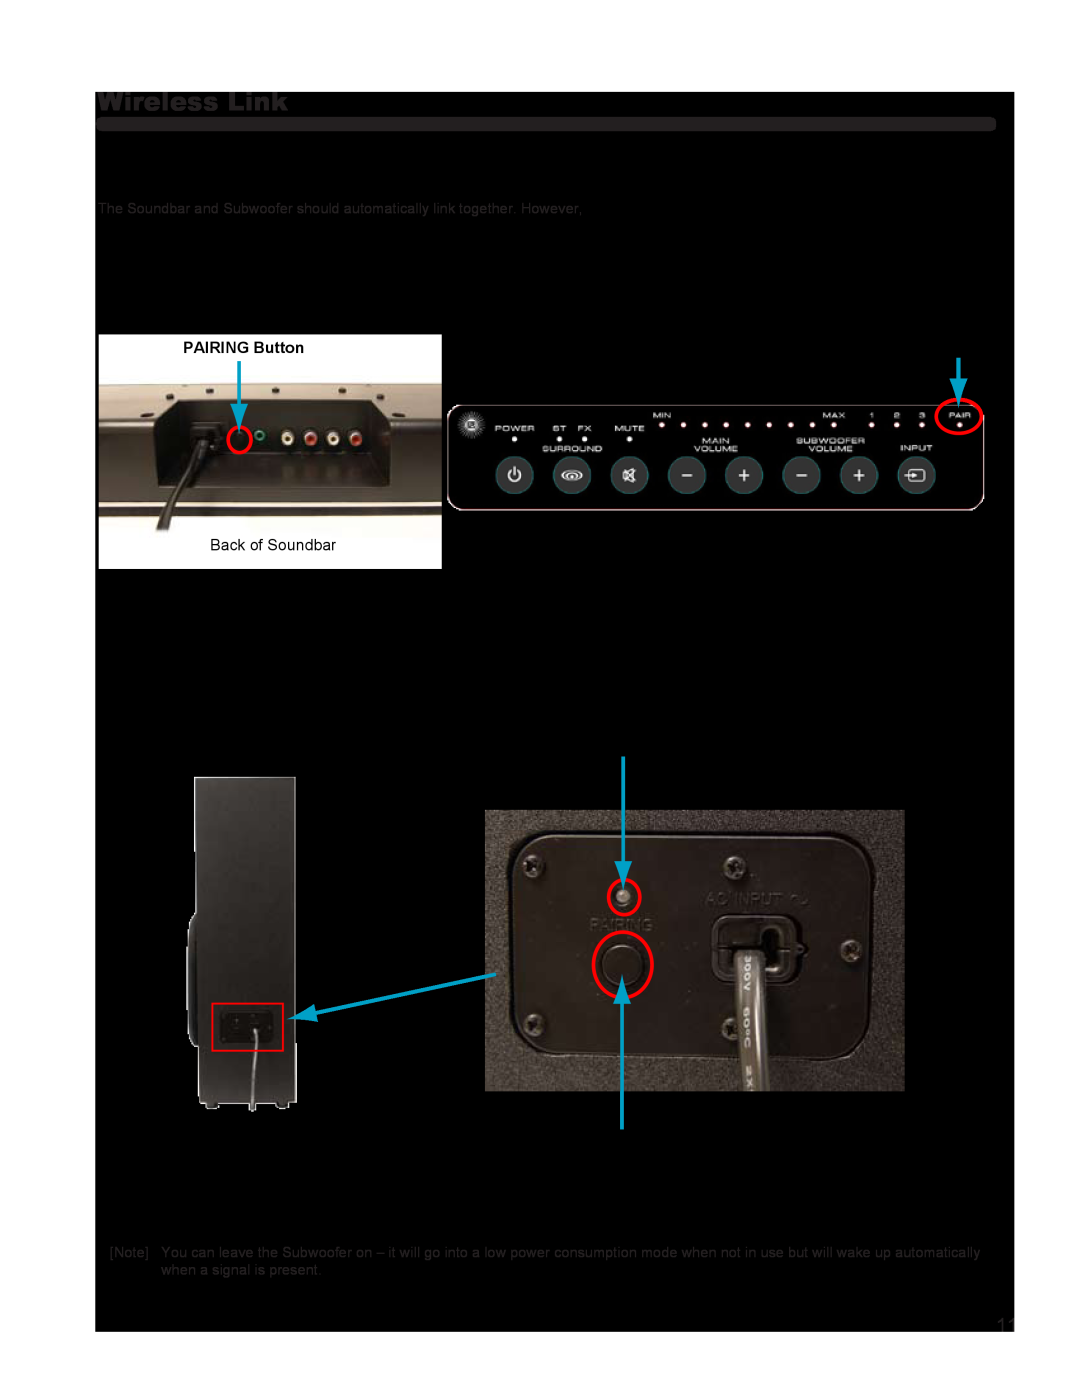 Hitachi SBW100 Wireless Link, Back of Soundbar, Subwoofer Back Panel, Back of Subwoofer, PAIRING Button, PAIR Indicator 